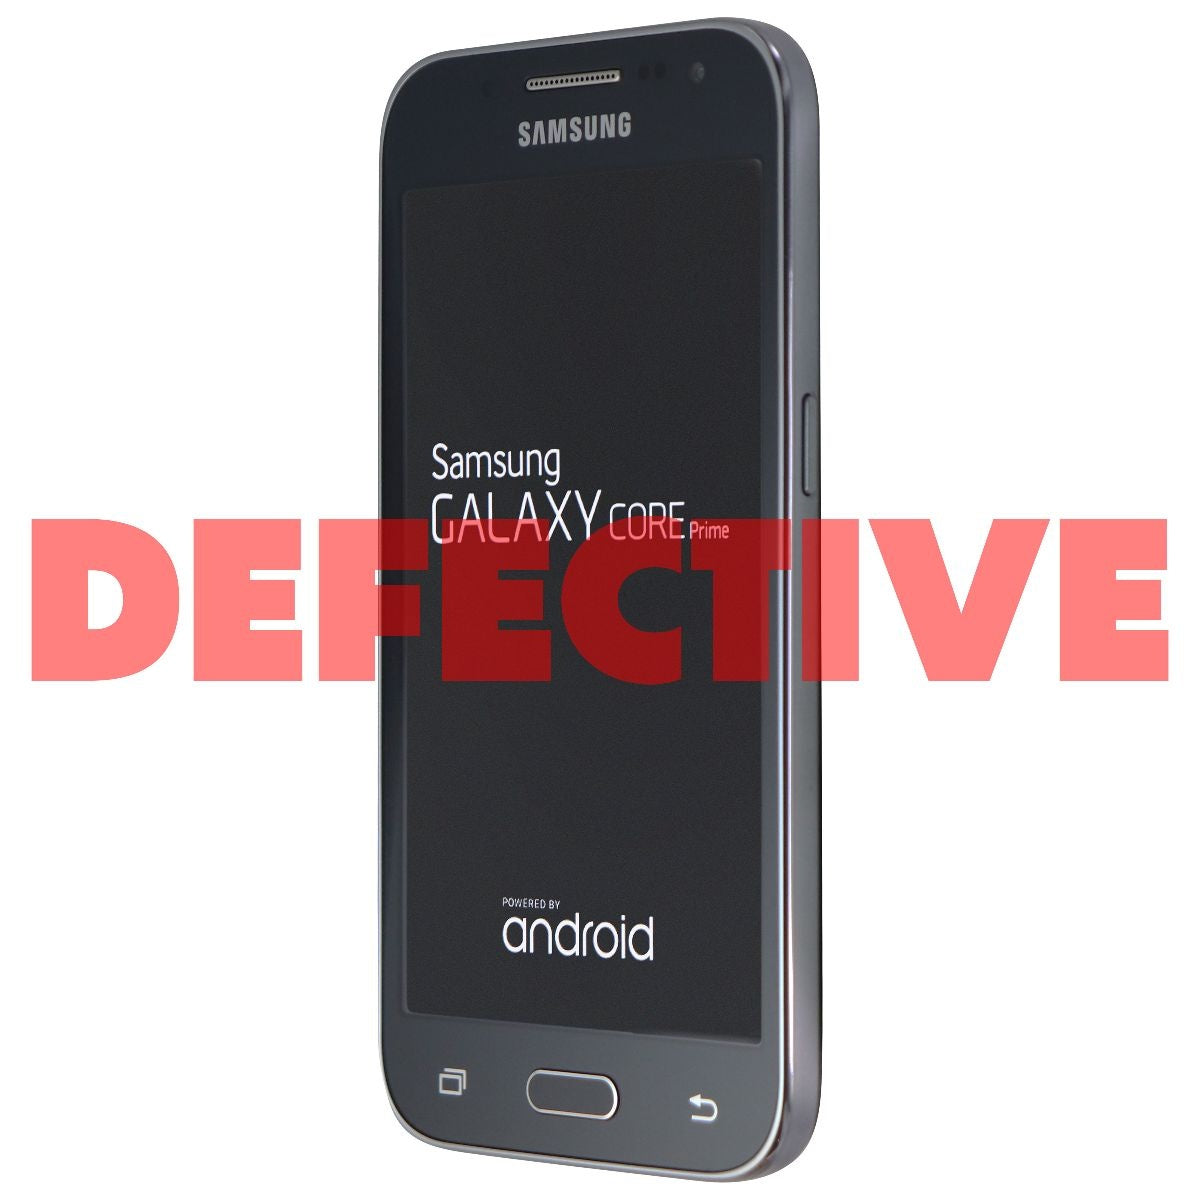 Samsung Galaxy Core Prime (4.5-inch) Smartphone (SM-G360V) Verizon - 8GB/Black Cell Phones & Smartphones Samsung    - Simple Cell Bulk Wholesale Pricing - USA Seller